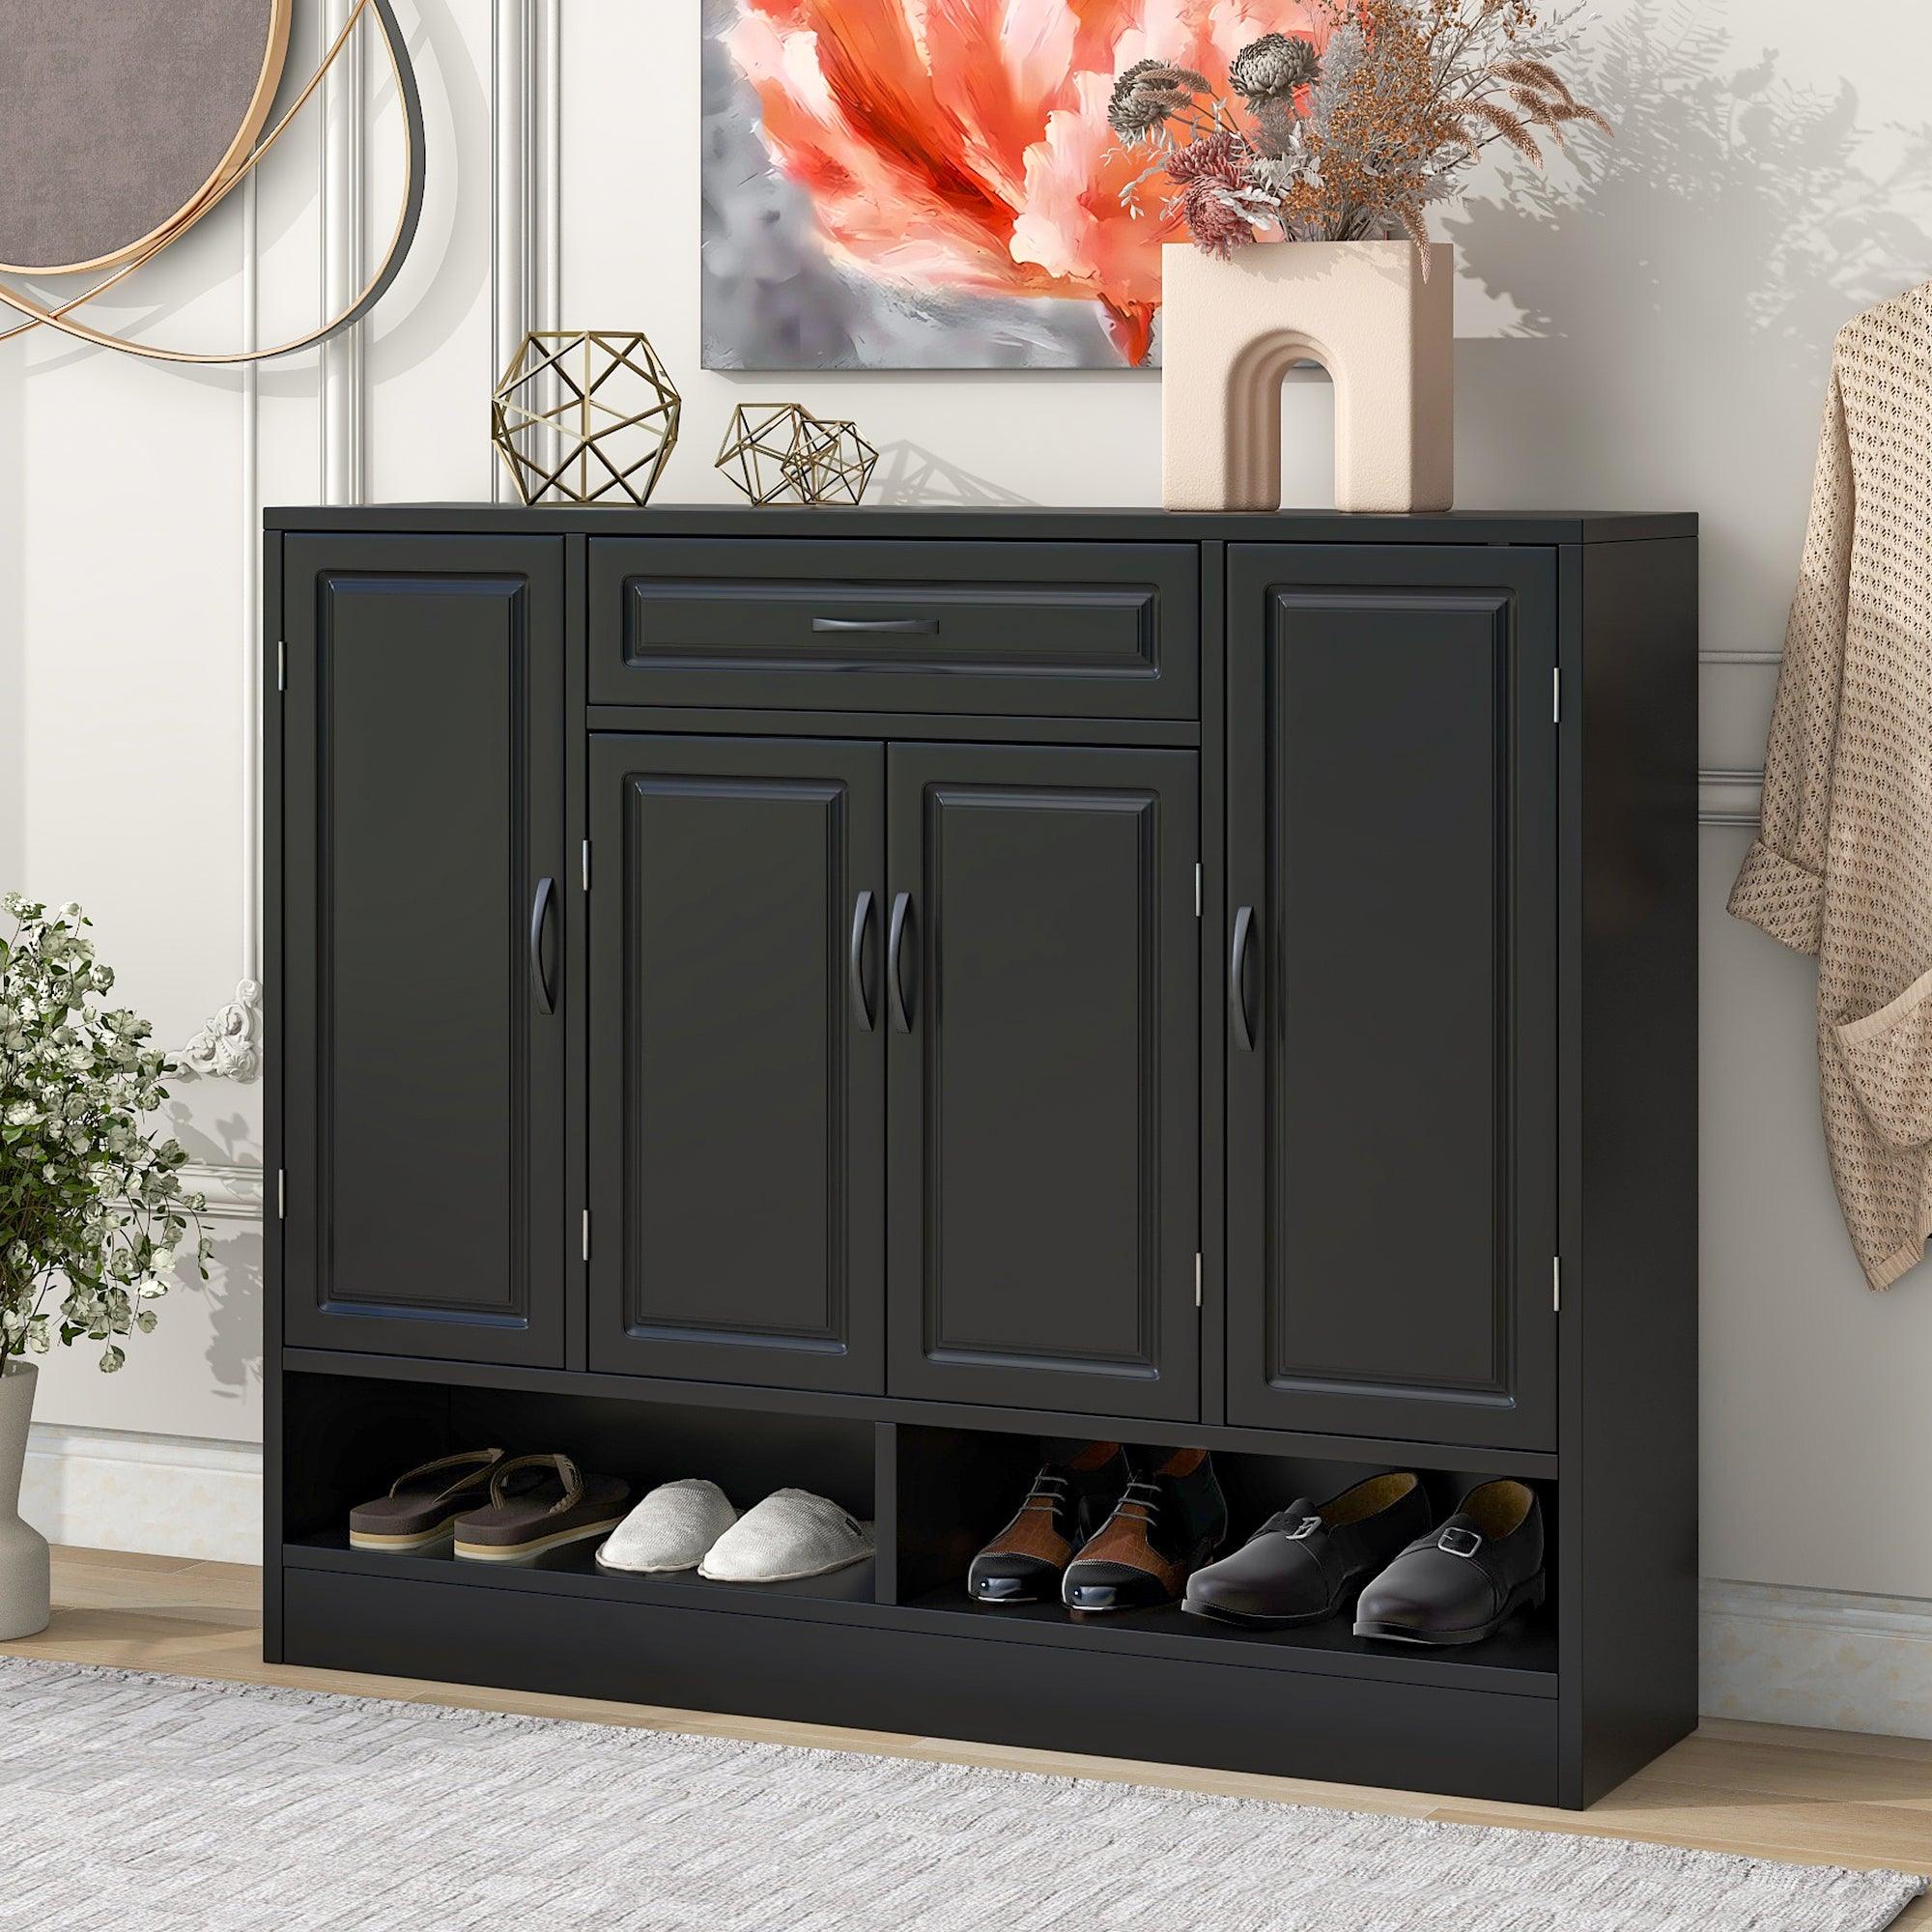 🆓🚛 Sleek & Modern Shoe Cabinet With Adjustable Shelves, Minimalist Shoe Storage Organizer With Sturdy Top Surface, Black